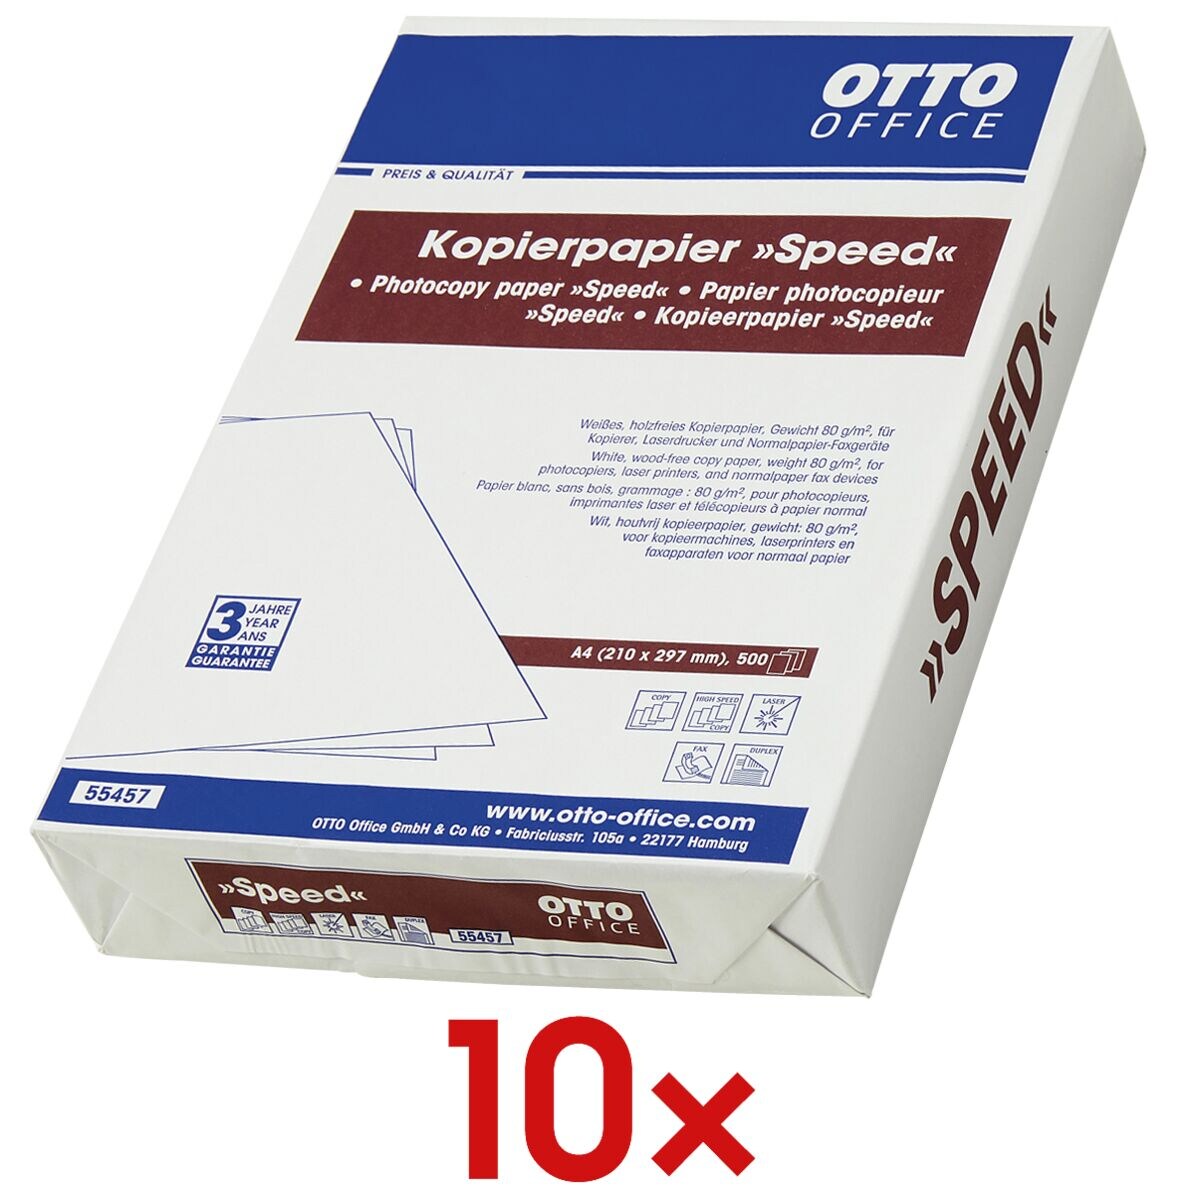 10x Kopierpapier OTTO Office SPEED - 5000 Blatt gesamt, 80g/qm